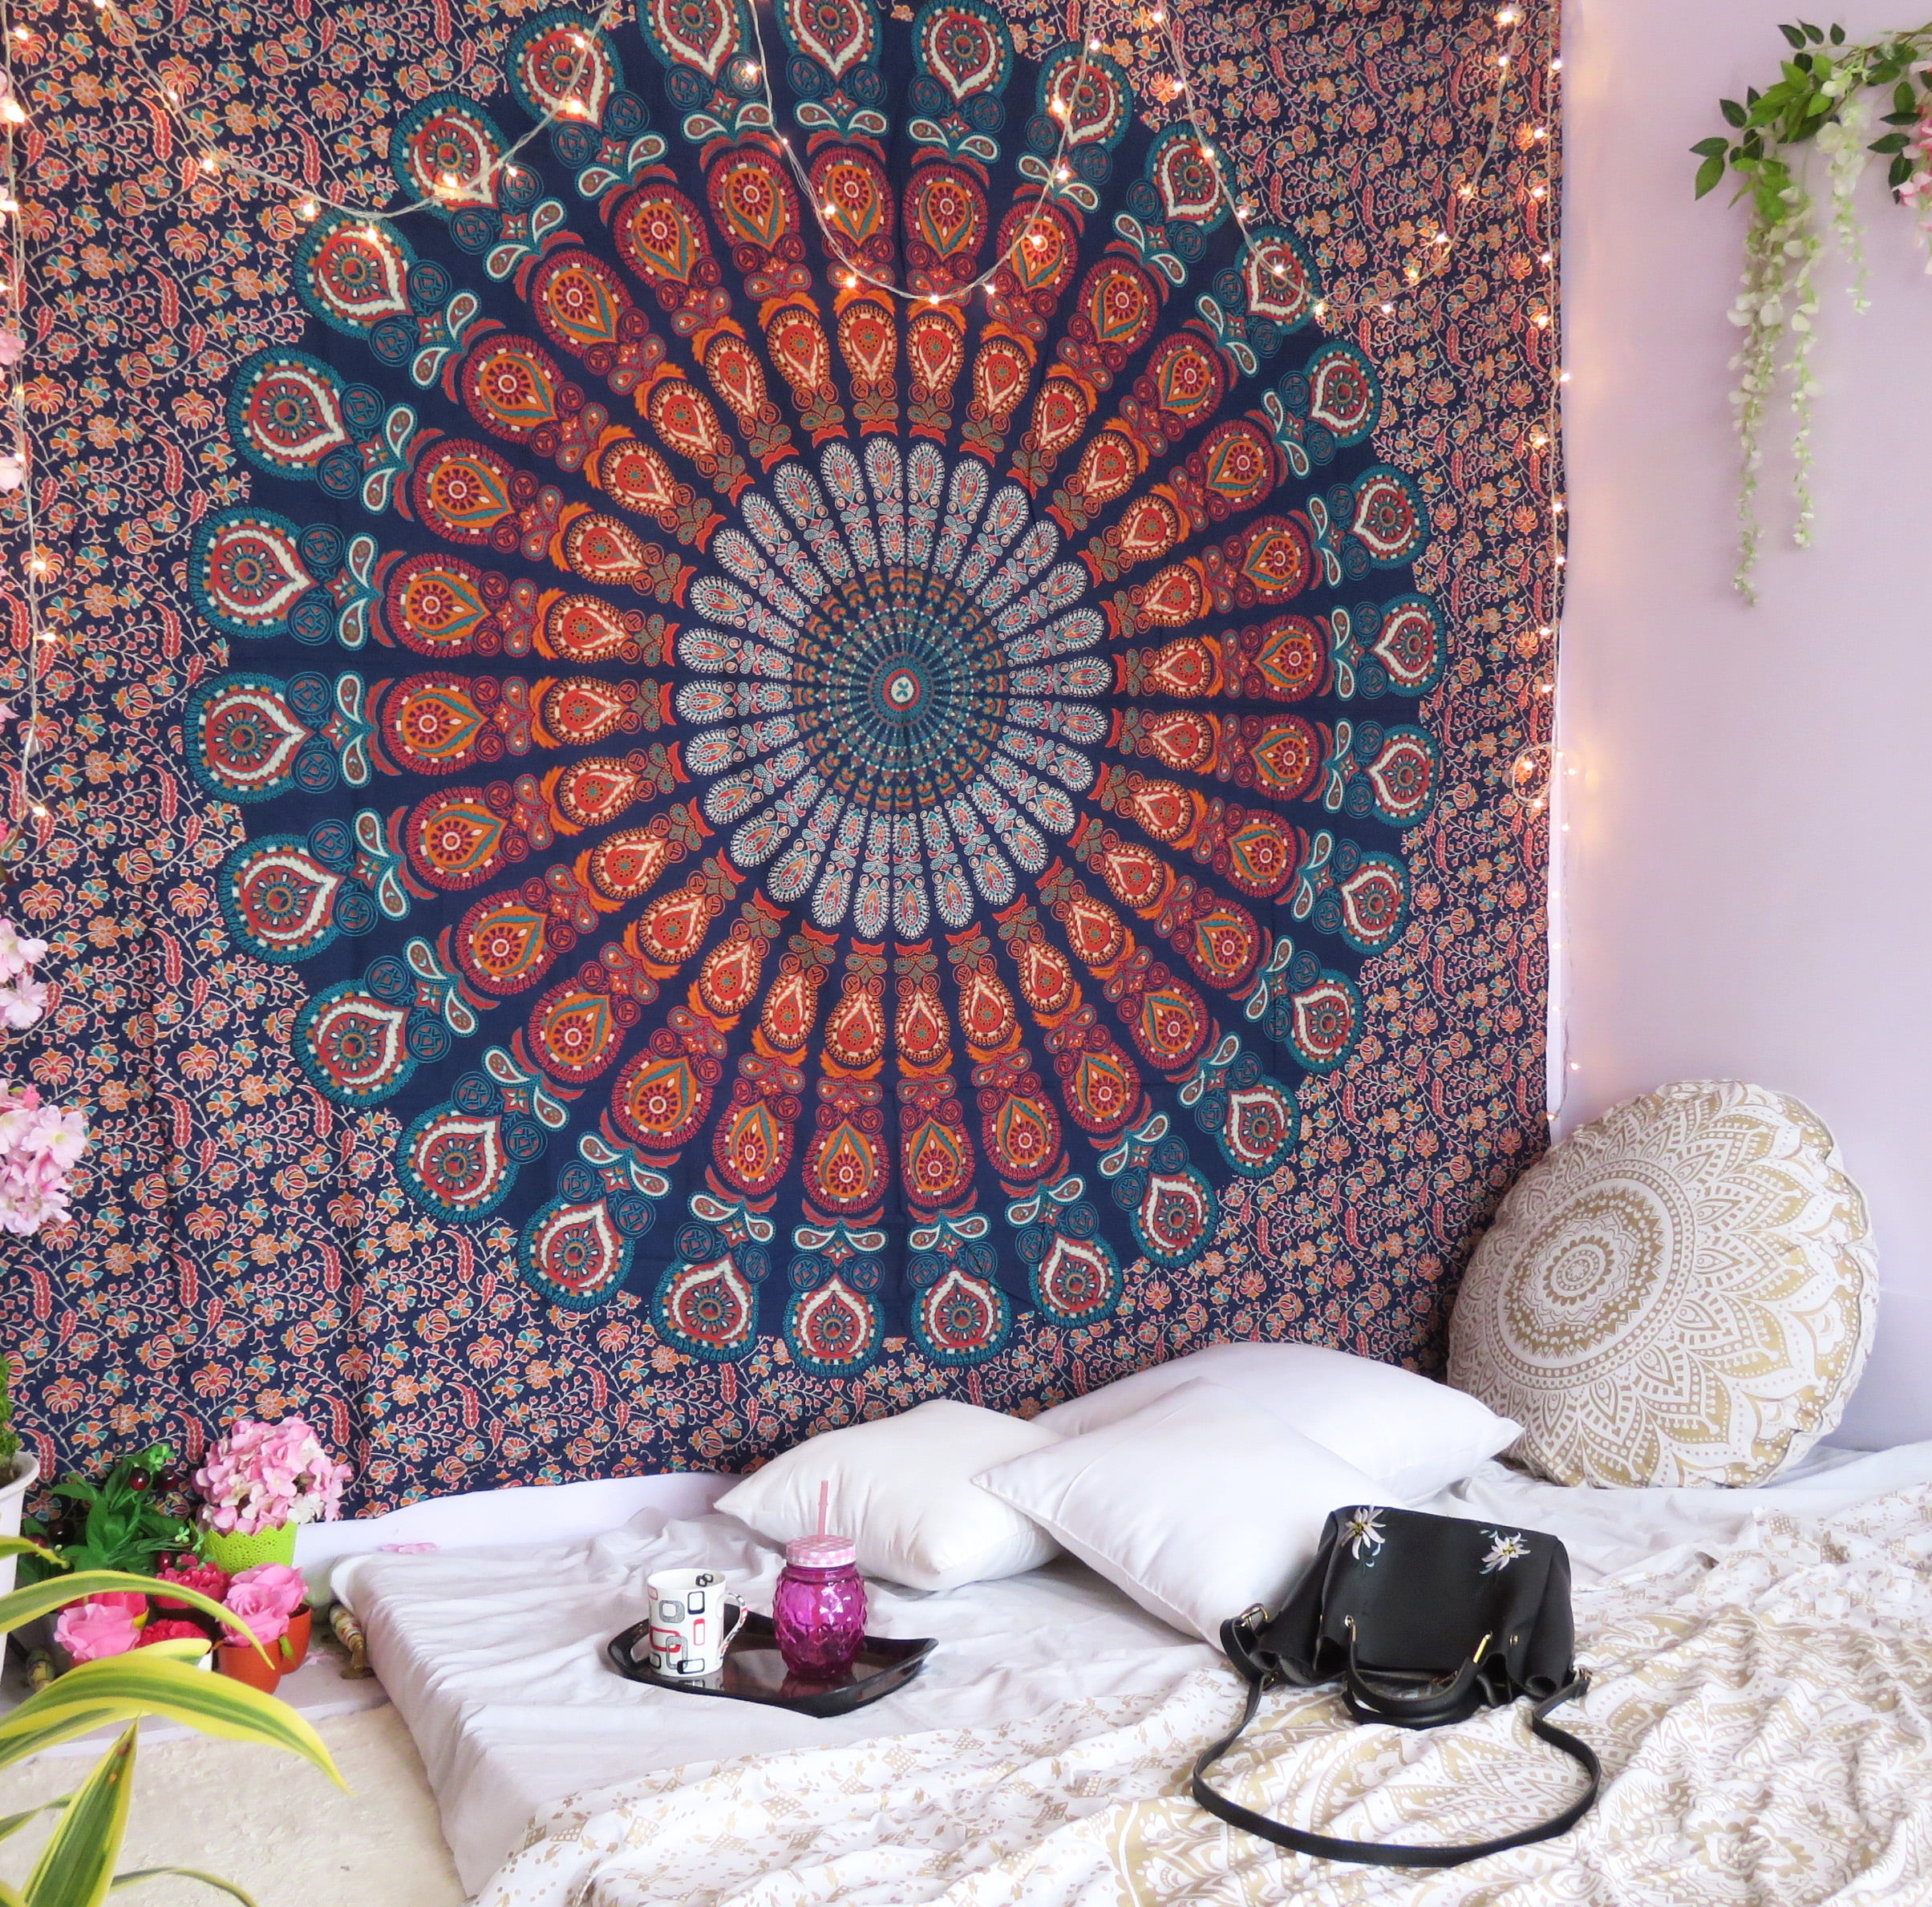 Ombre Mandala Tapestry Wall Hanging Bohemian Indian Hippie Beach Throw Decor Art